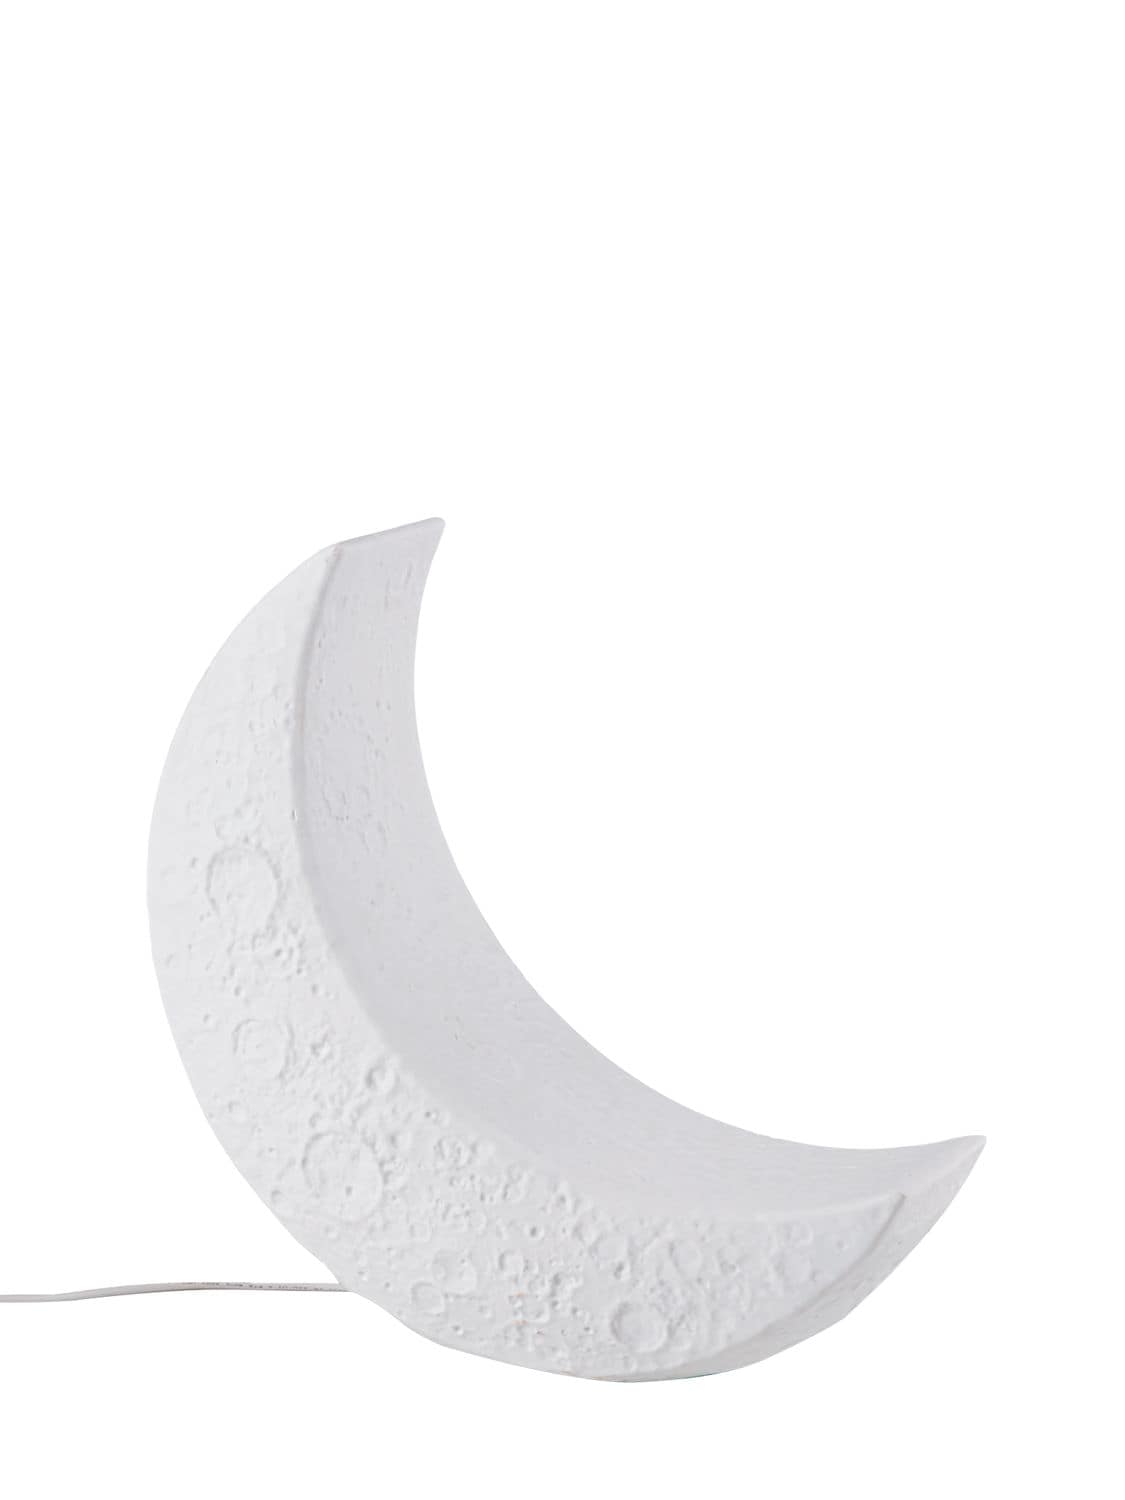 Seletti My Tiny Moon Lamp In White